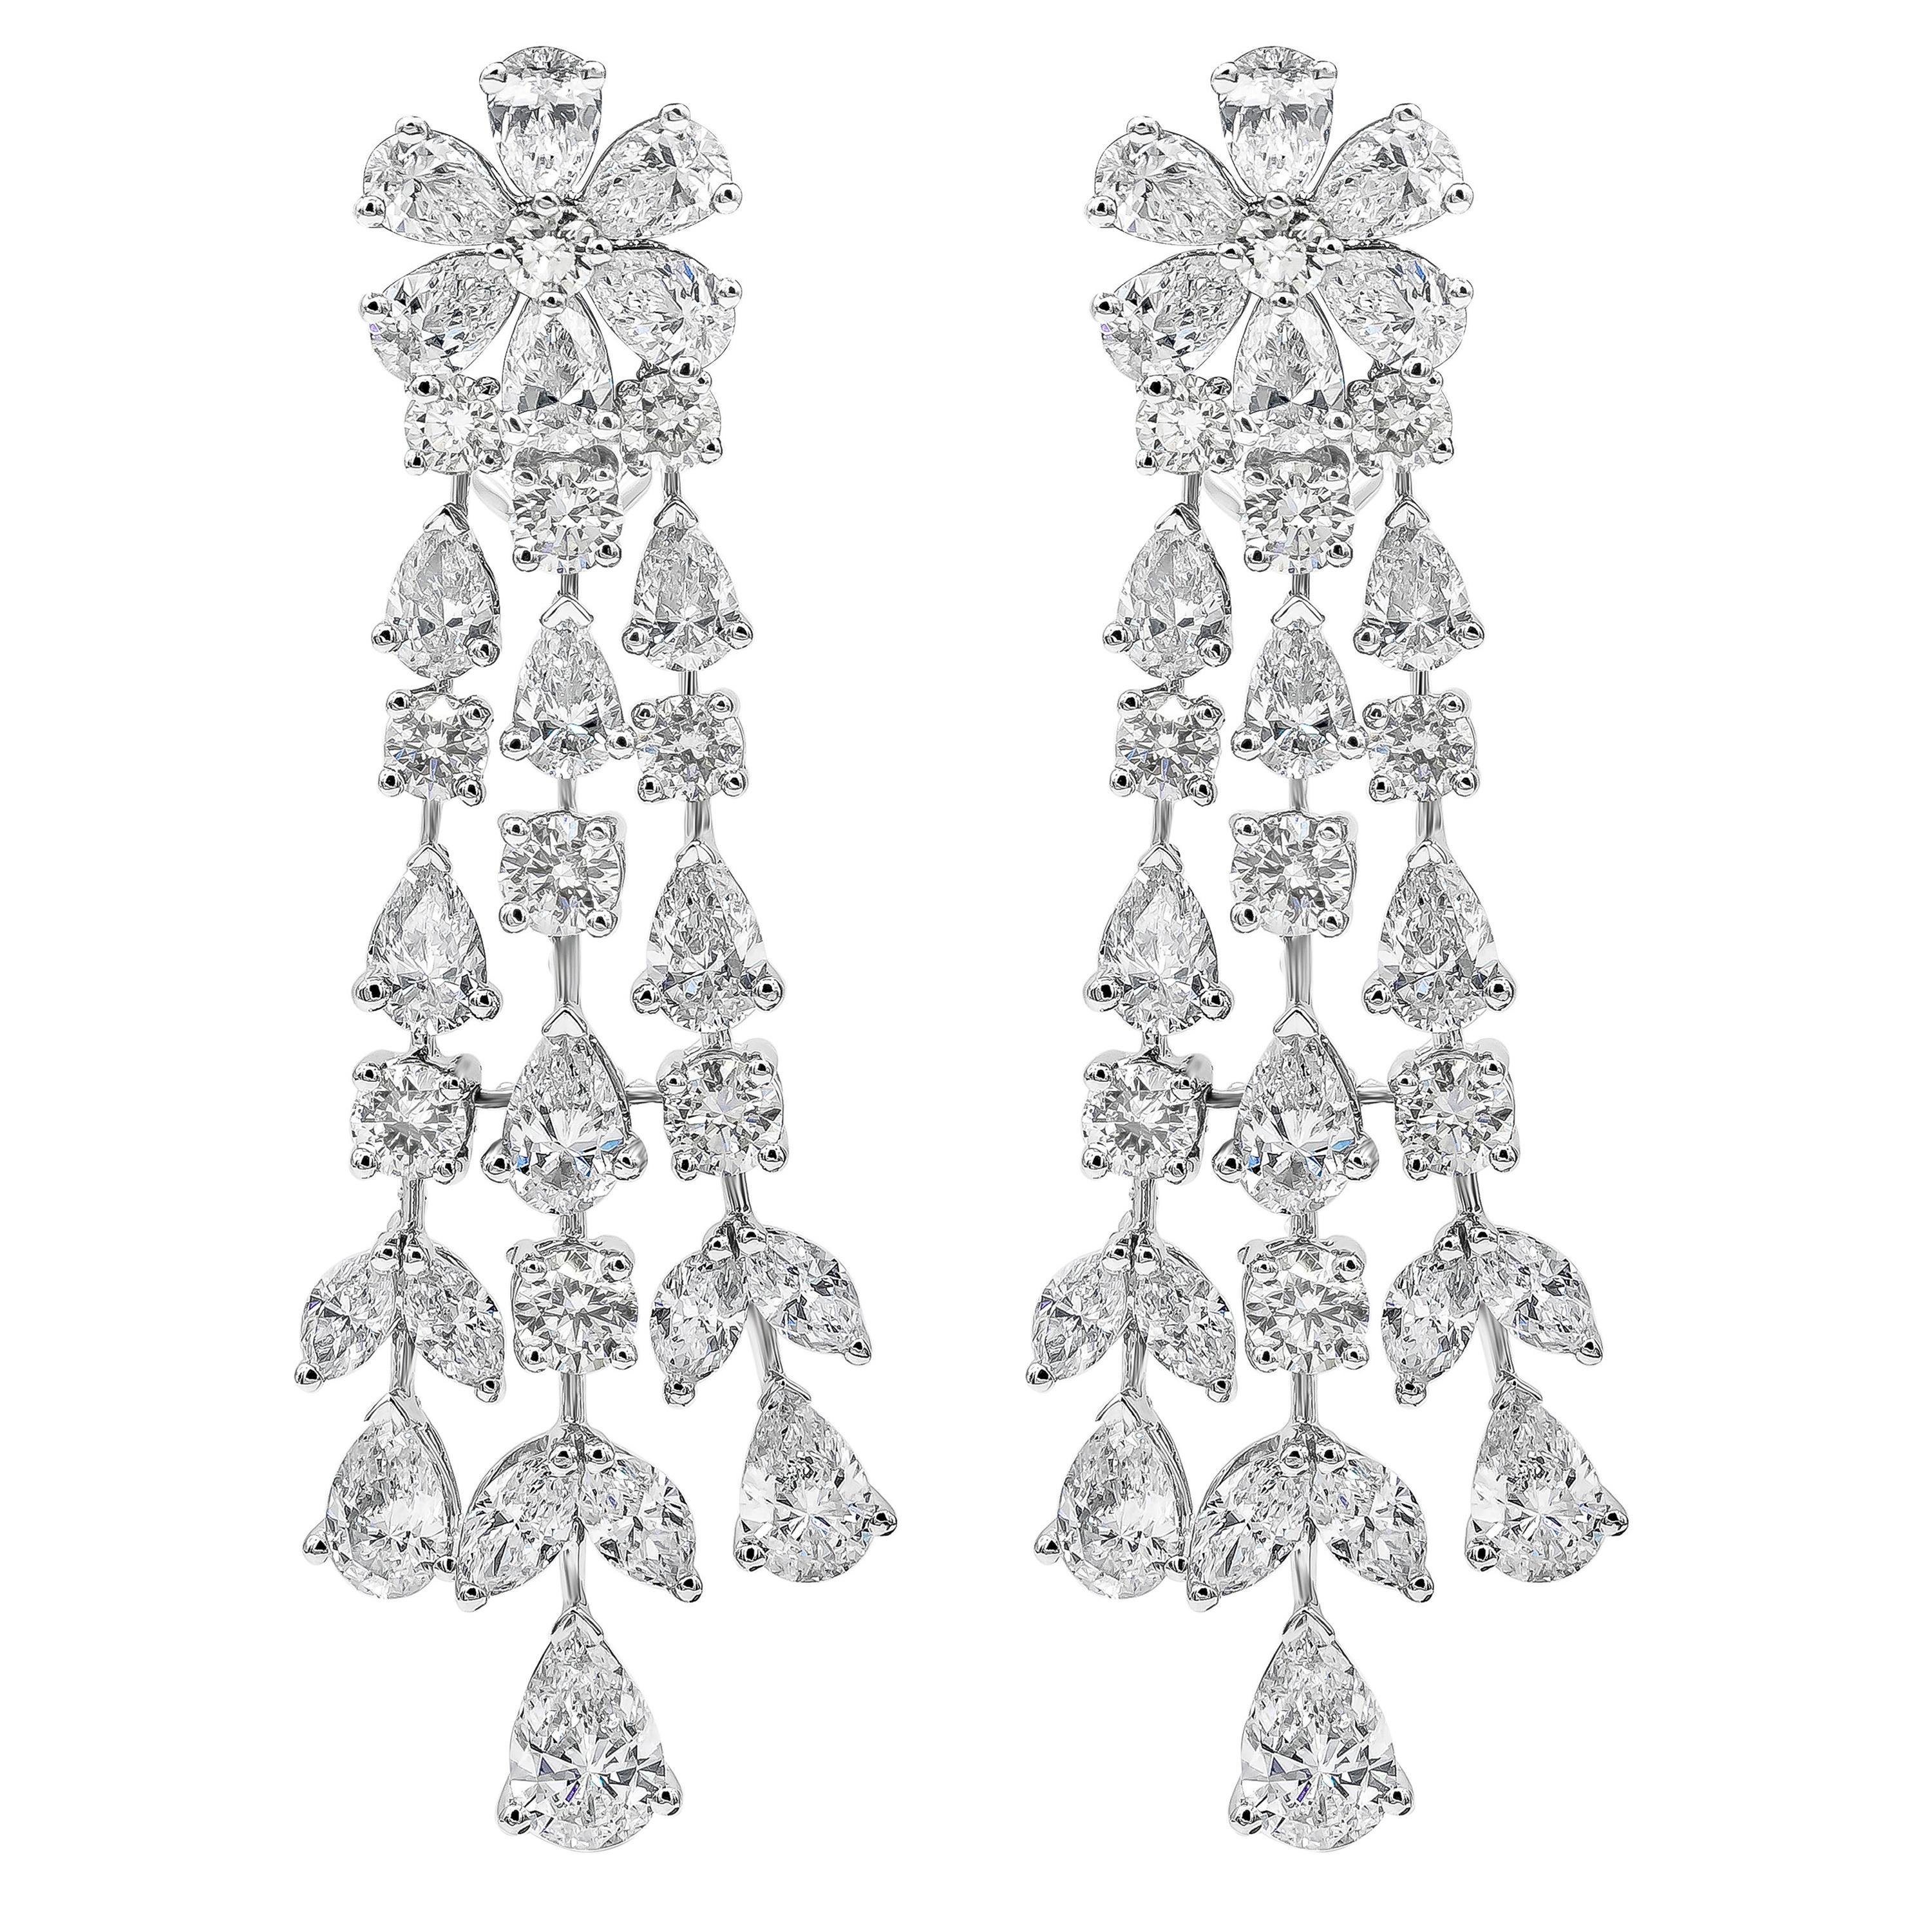 Roman Malakov 12.45 Carats Total Mixed Cut Diamond Chandelier Earrings For Sale